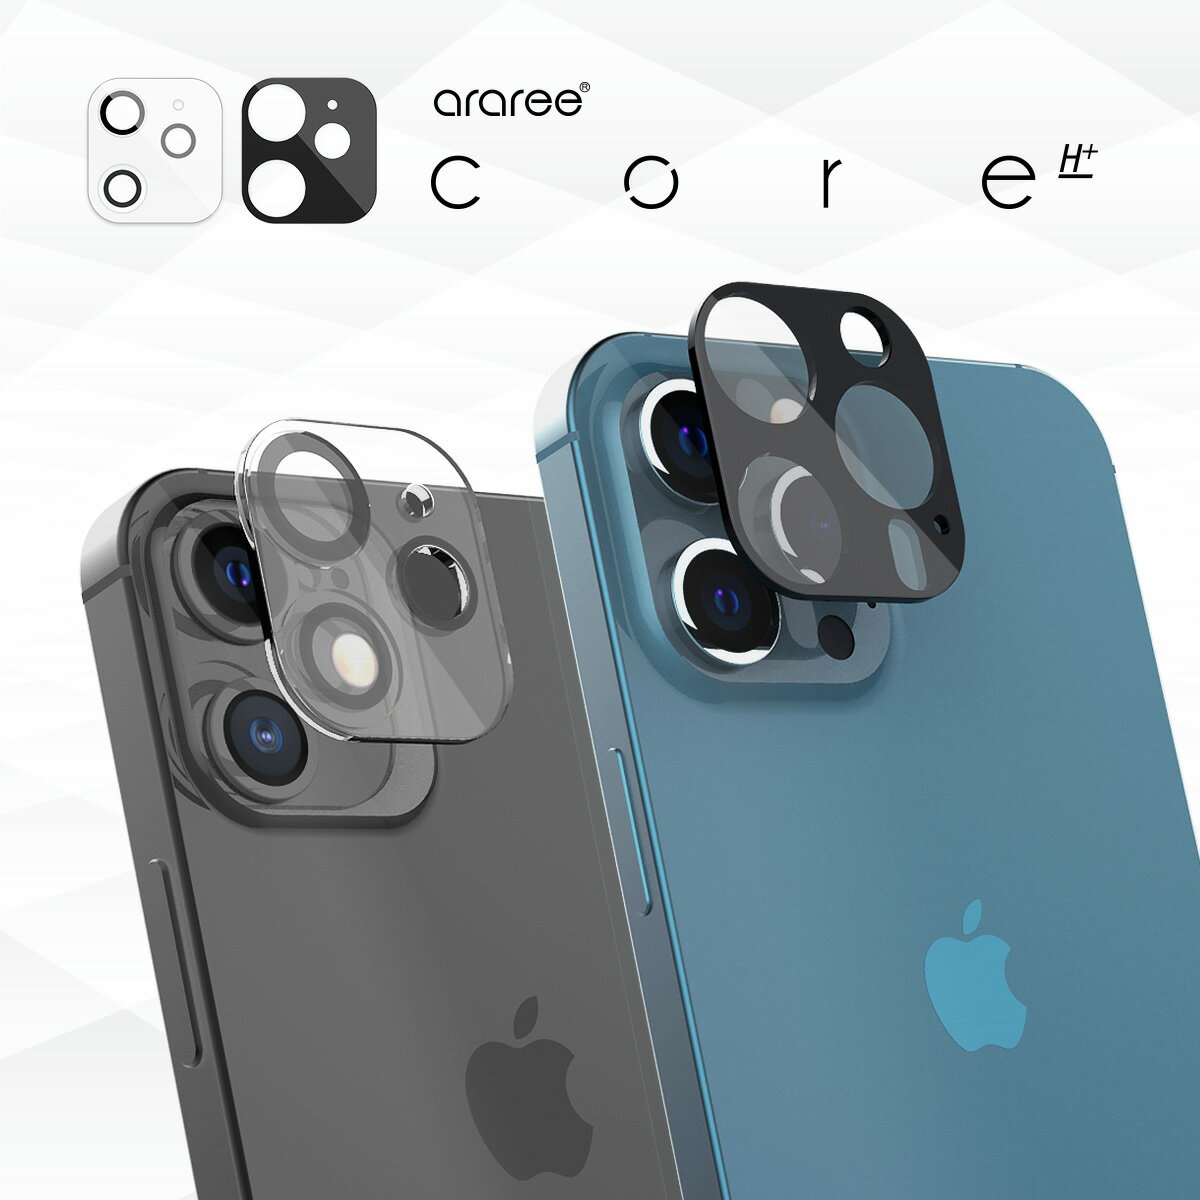 iPhone12 カメラフィルム カメラ保護 カメラカバー ガラスフィルム 0.35mm ラウンドエッジ 加工 カメラレンズカバー 指紋防止 高透過率 カメラレンズ保護 フィルム カメラガラスフィルム iPhone 12 アイフォン 12 アイフォン12 対応 araree C-Sub Core